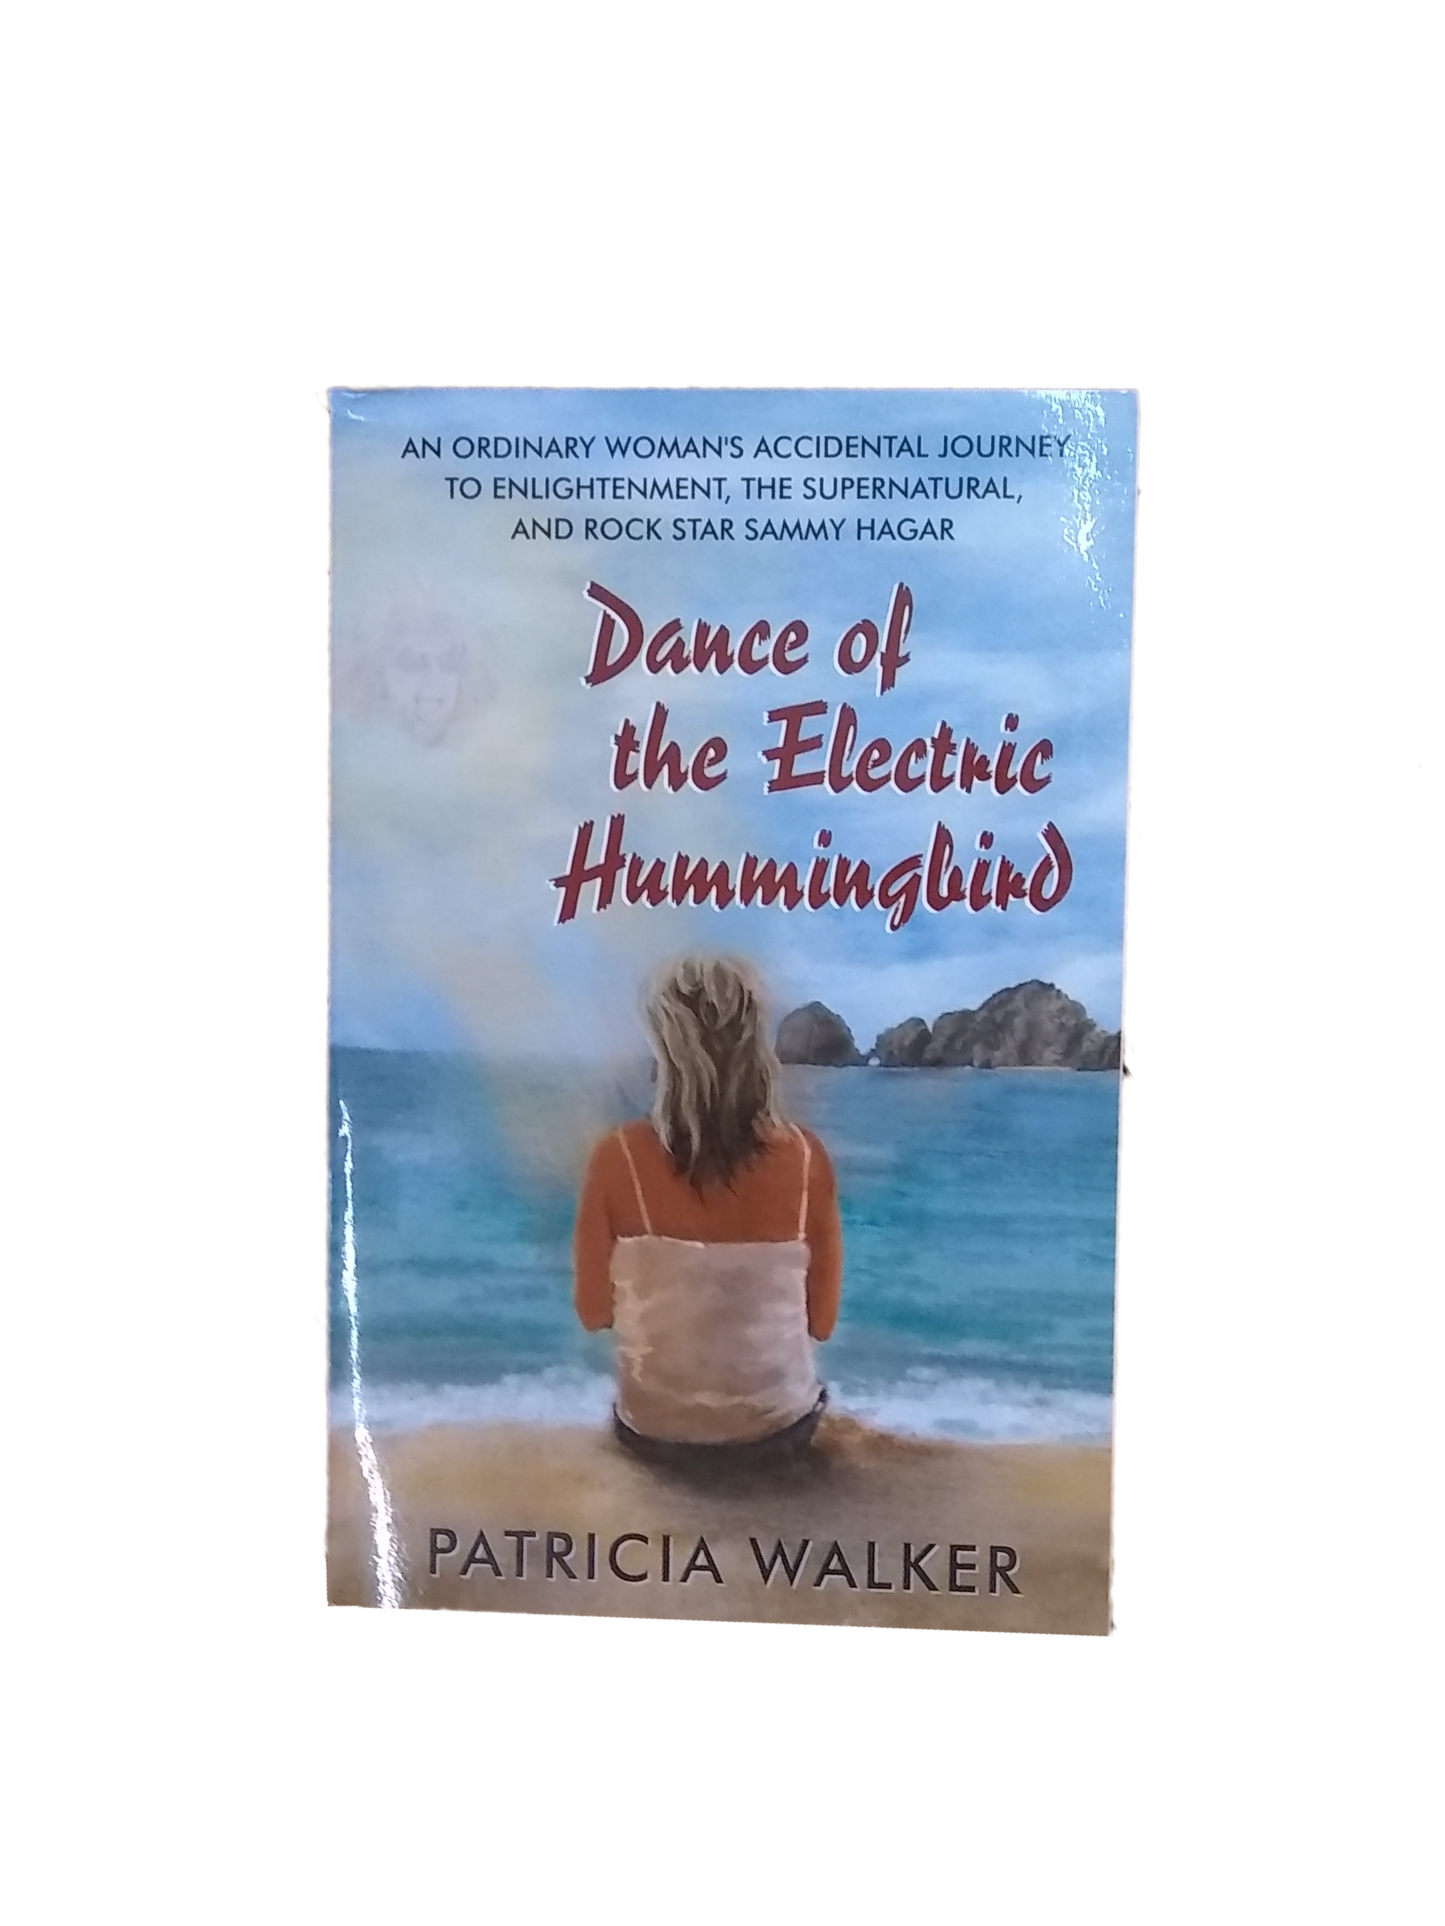 Dance of the Electric Hummingbird